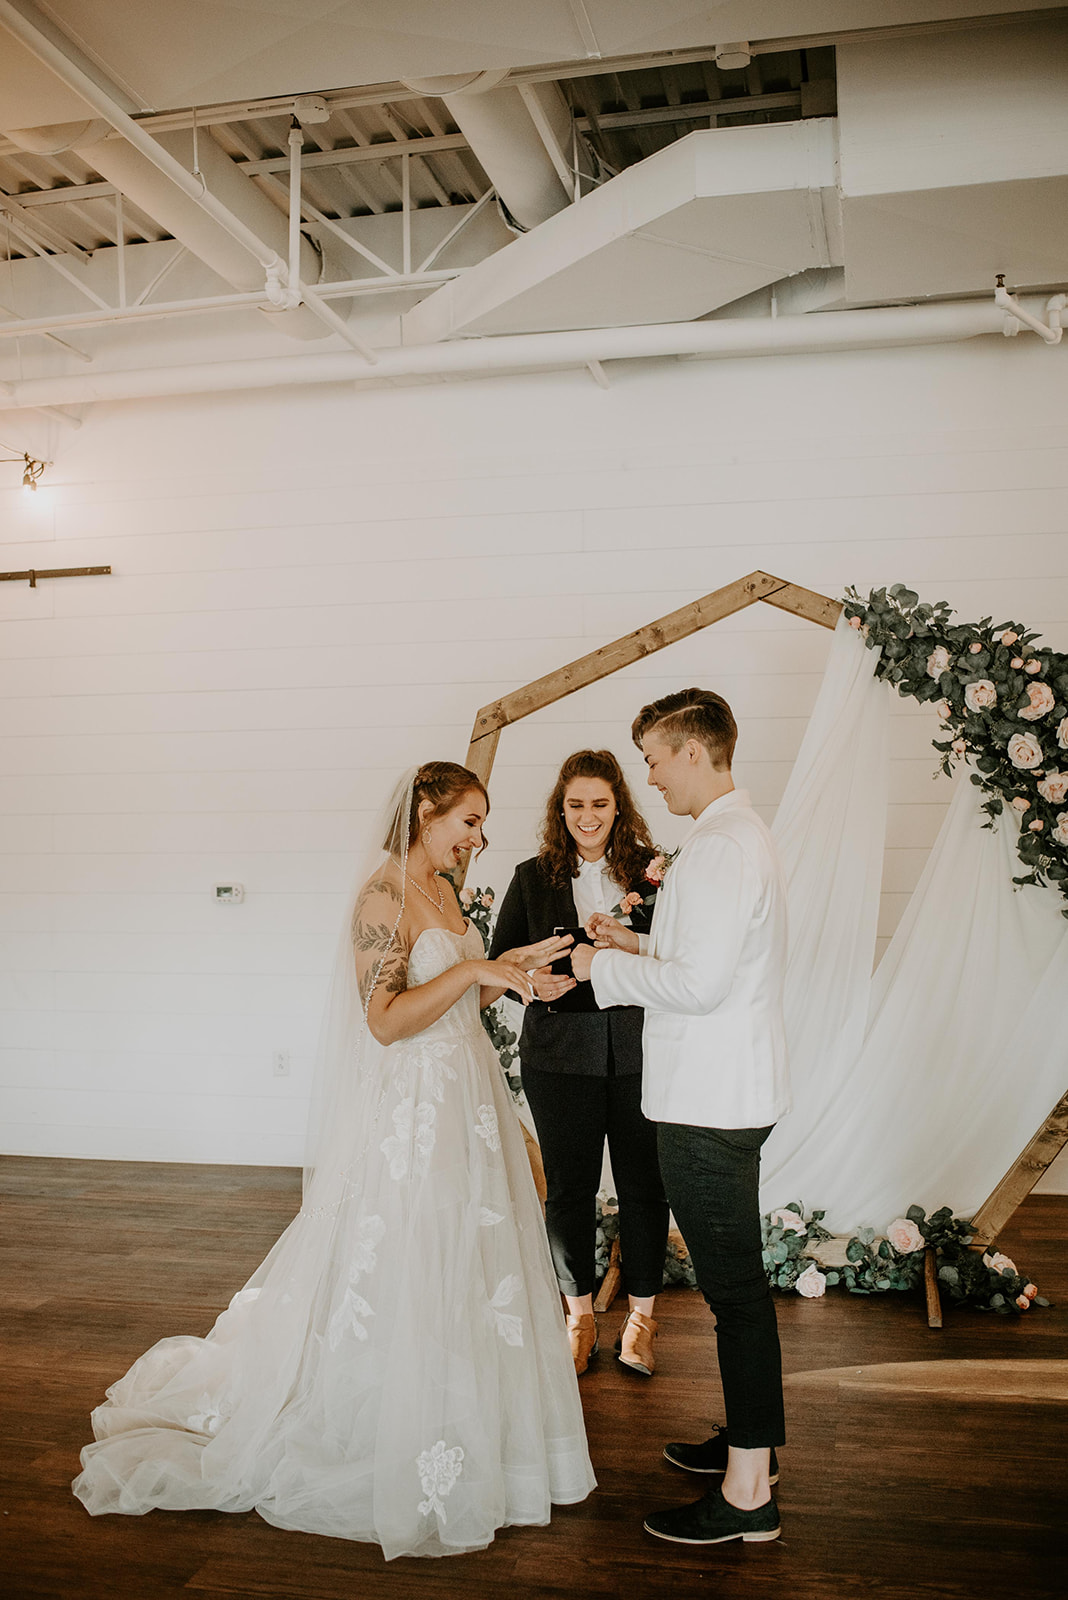 LGBTQ wedding, Bash 828, Indiana Wedding Venue, Carmel IN, Wedding ceremony, Indiana Brides, Michigan brides, floral wedding arch